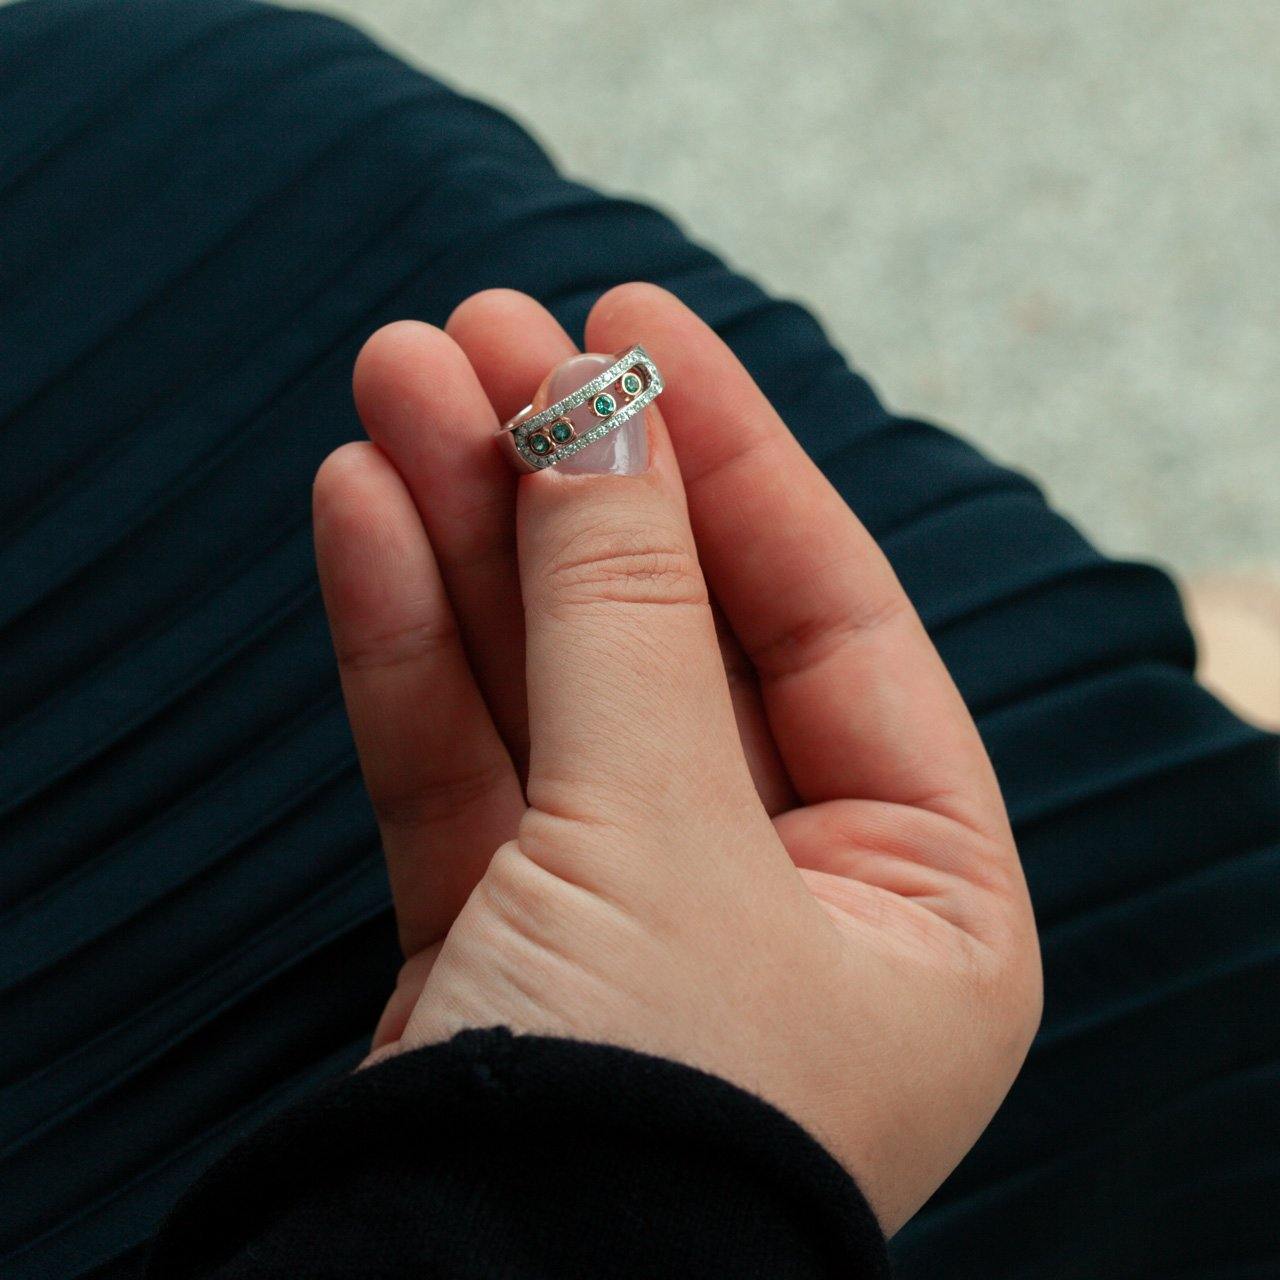 Elegant 0.22ct natural alexandrite ring held between fingers showcasing the 18k white and rose gold design